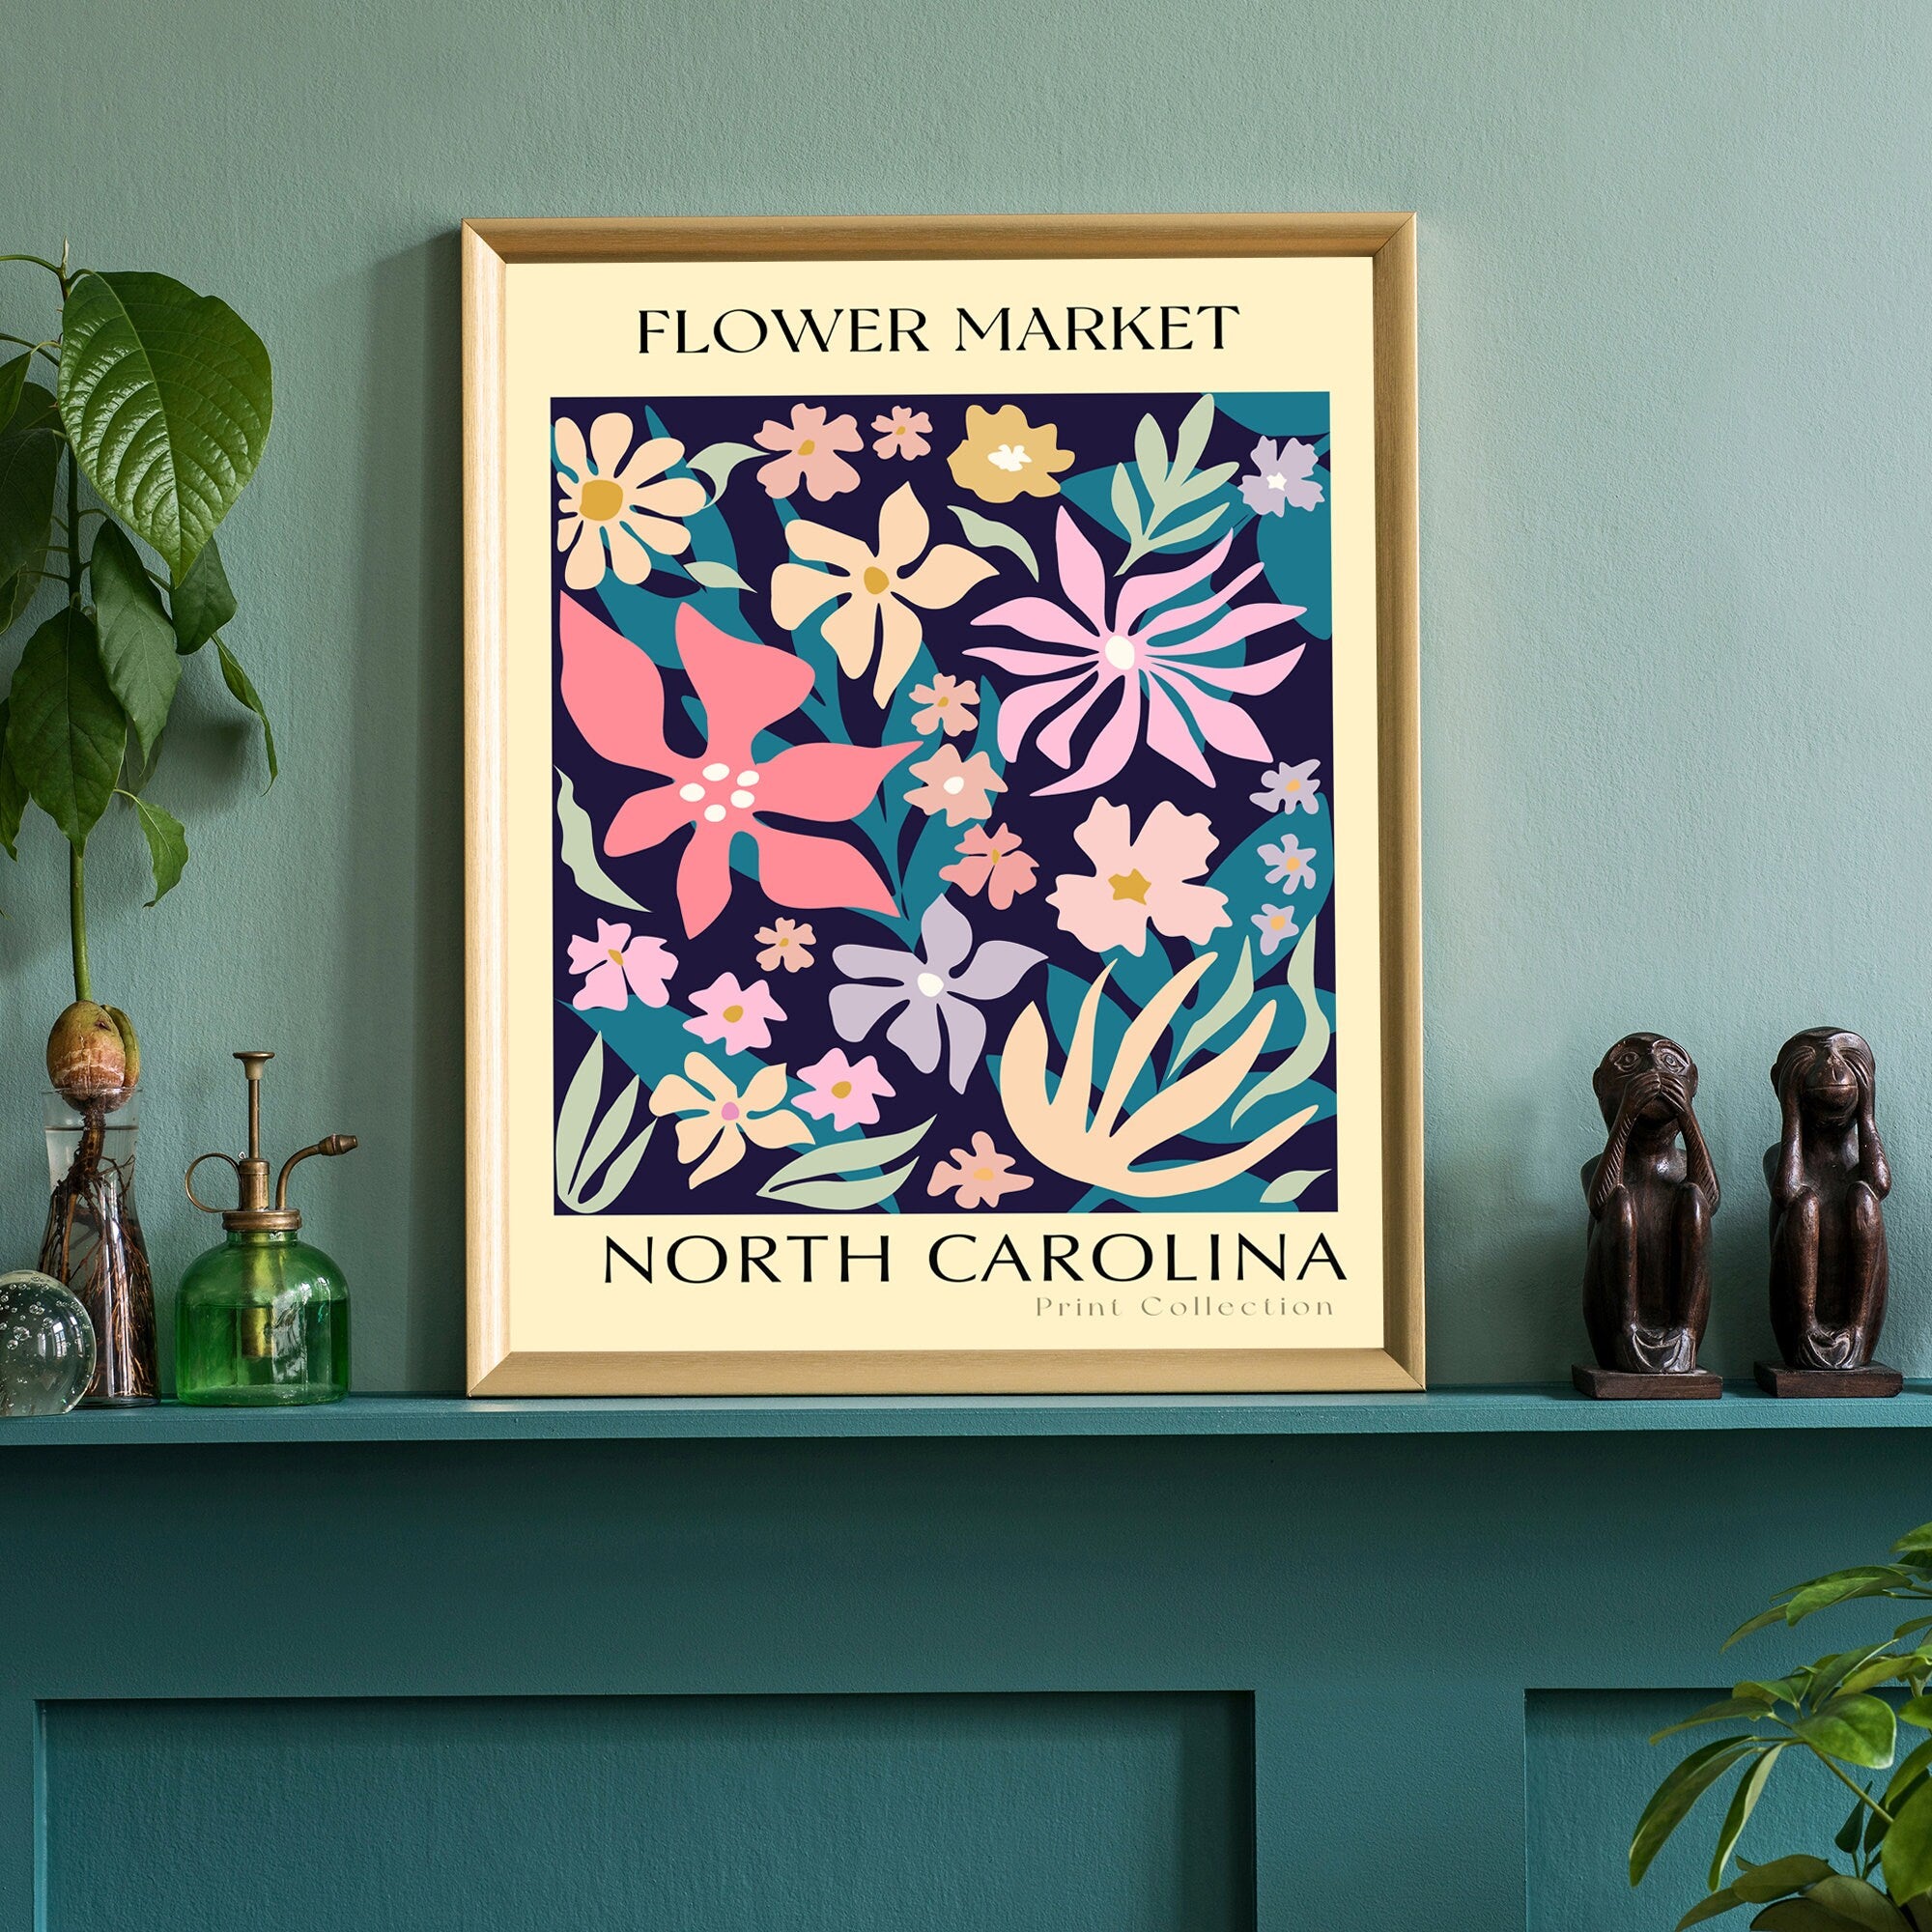 North Carolina State flower print, States poster, North Carolina flower market poster, Botanical posters, Nature floral poster artwork